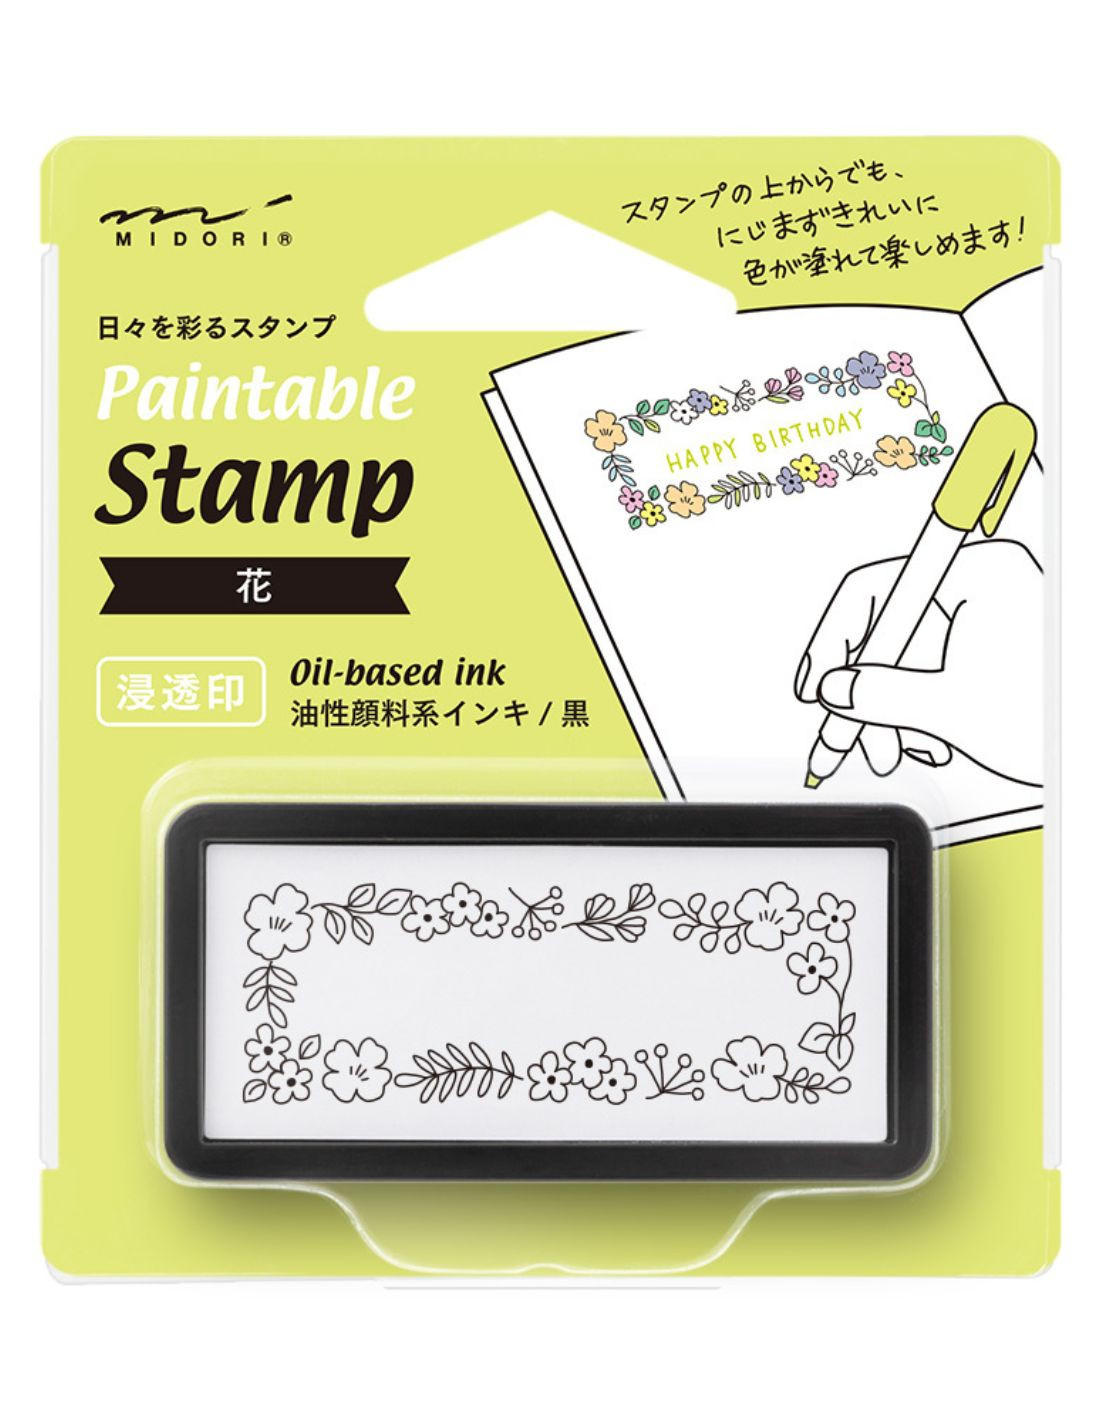 Pre-inked Paintable Stamp - Flowers - Midori